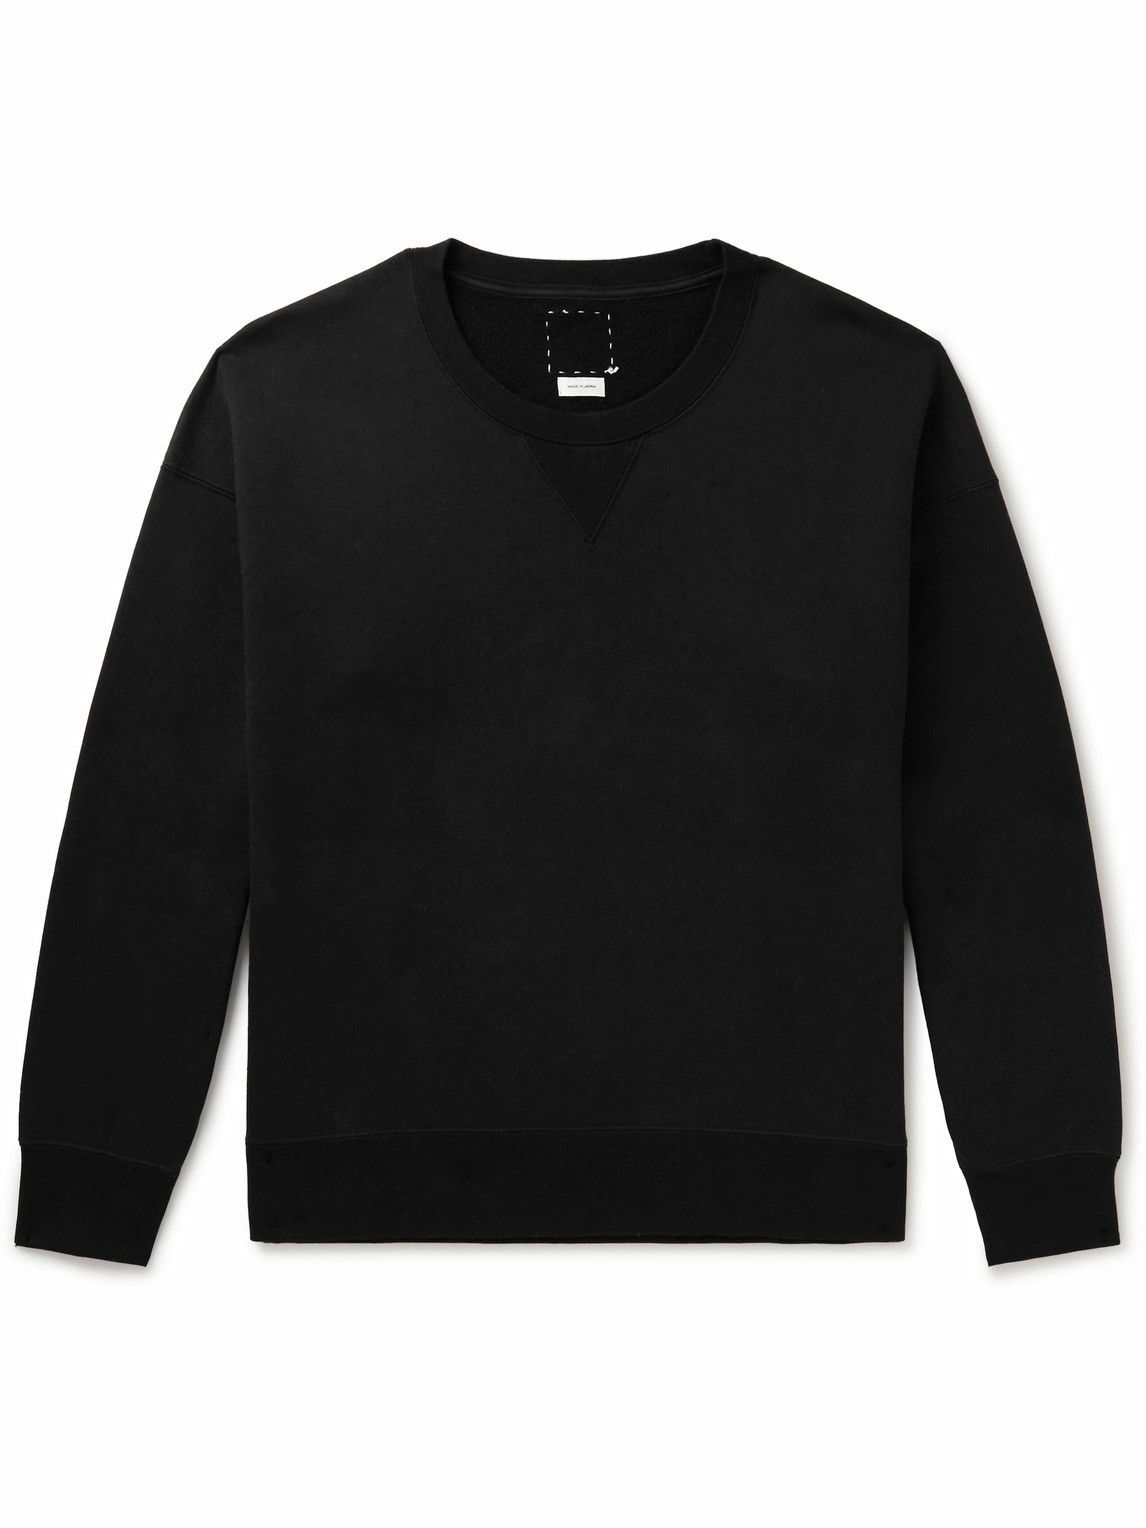 Visvim - Ultimate Jumbo SB Cotton Sweater - Black Visvim